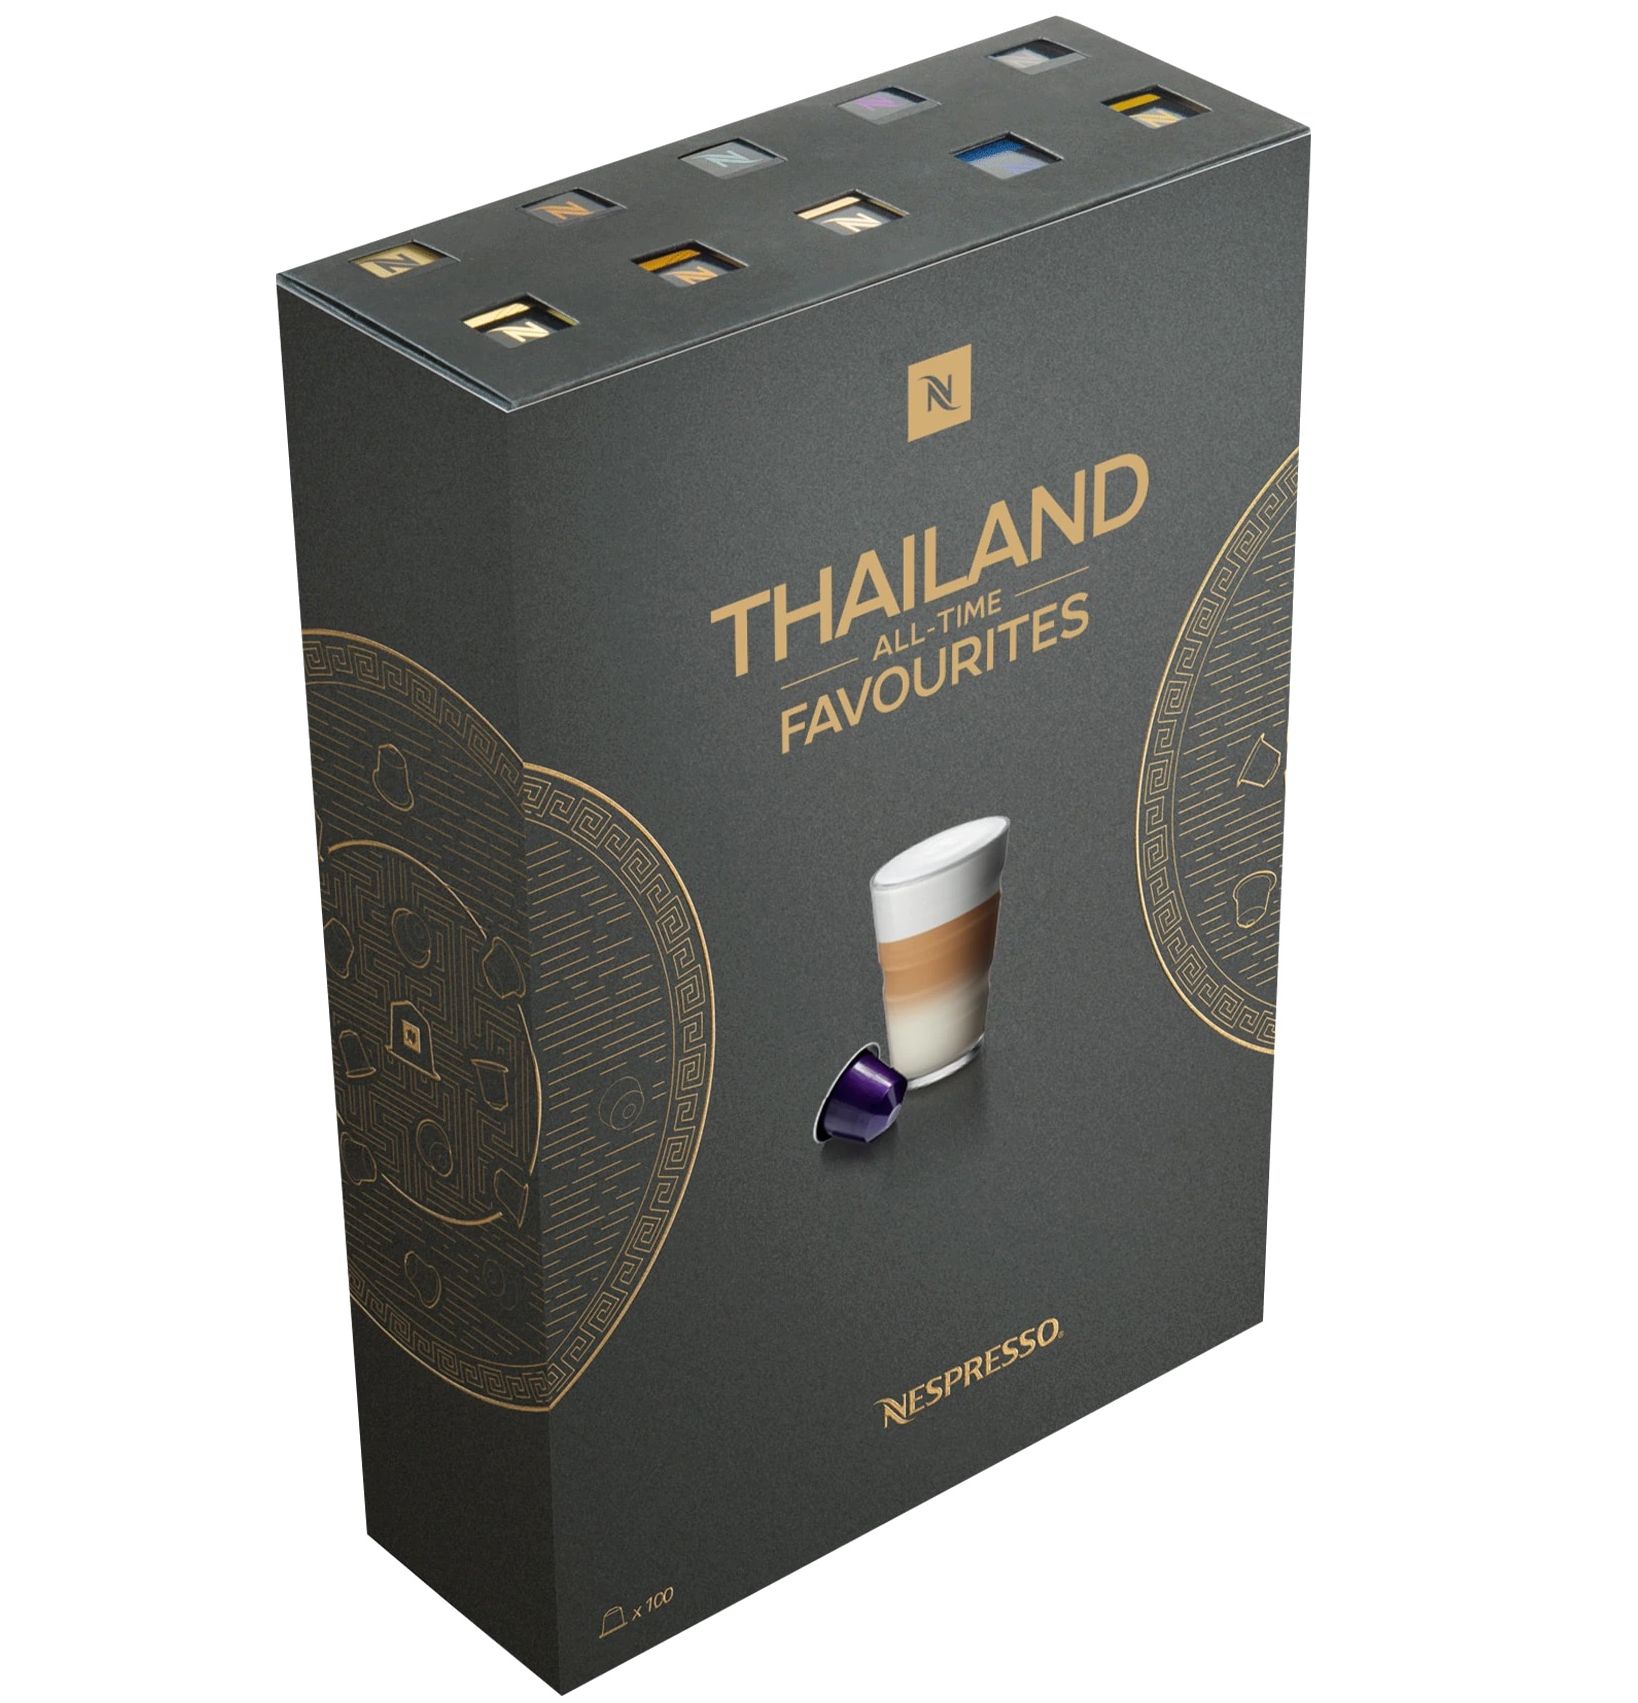 Nespresso Thailand All Time Favorites Variety Pack (10 Favorites) Ground Coffee Capsule เนสเพรสโซ ออลไทม์ วาไรตี้ (รวมรส 10รส) กาแฟคั่วบด แคปซูล 100 Capsules